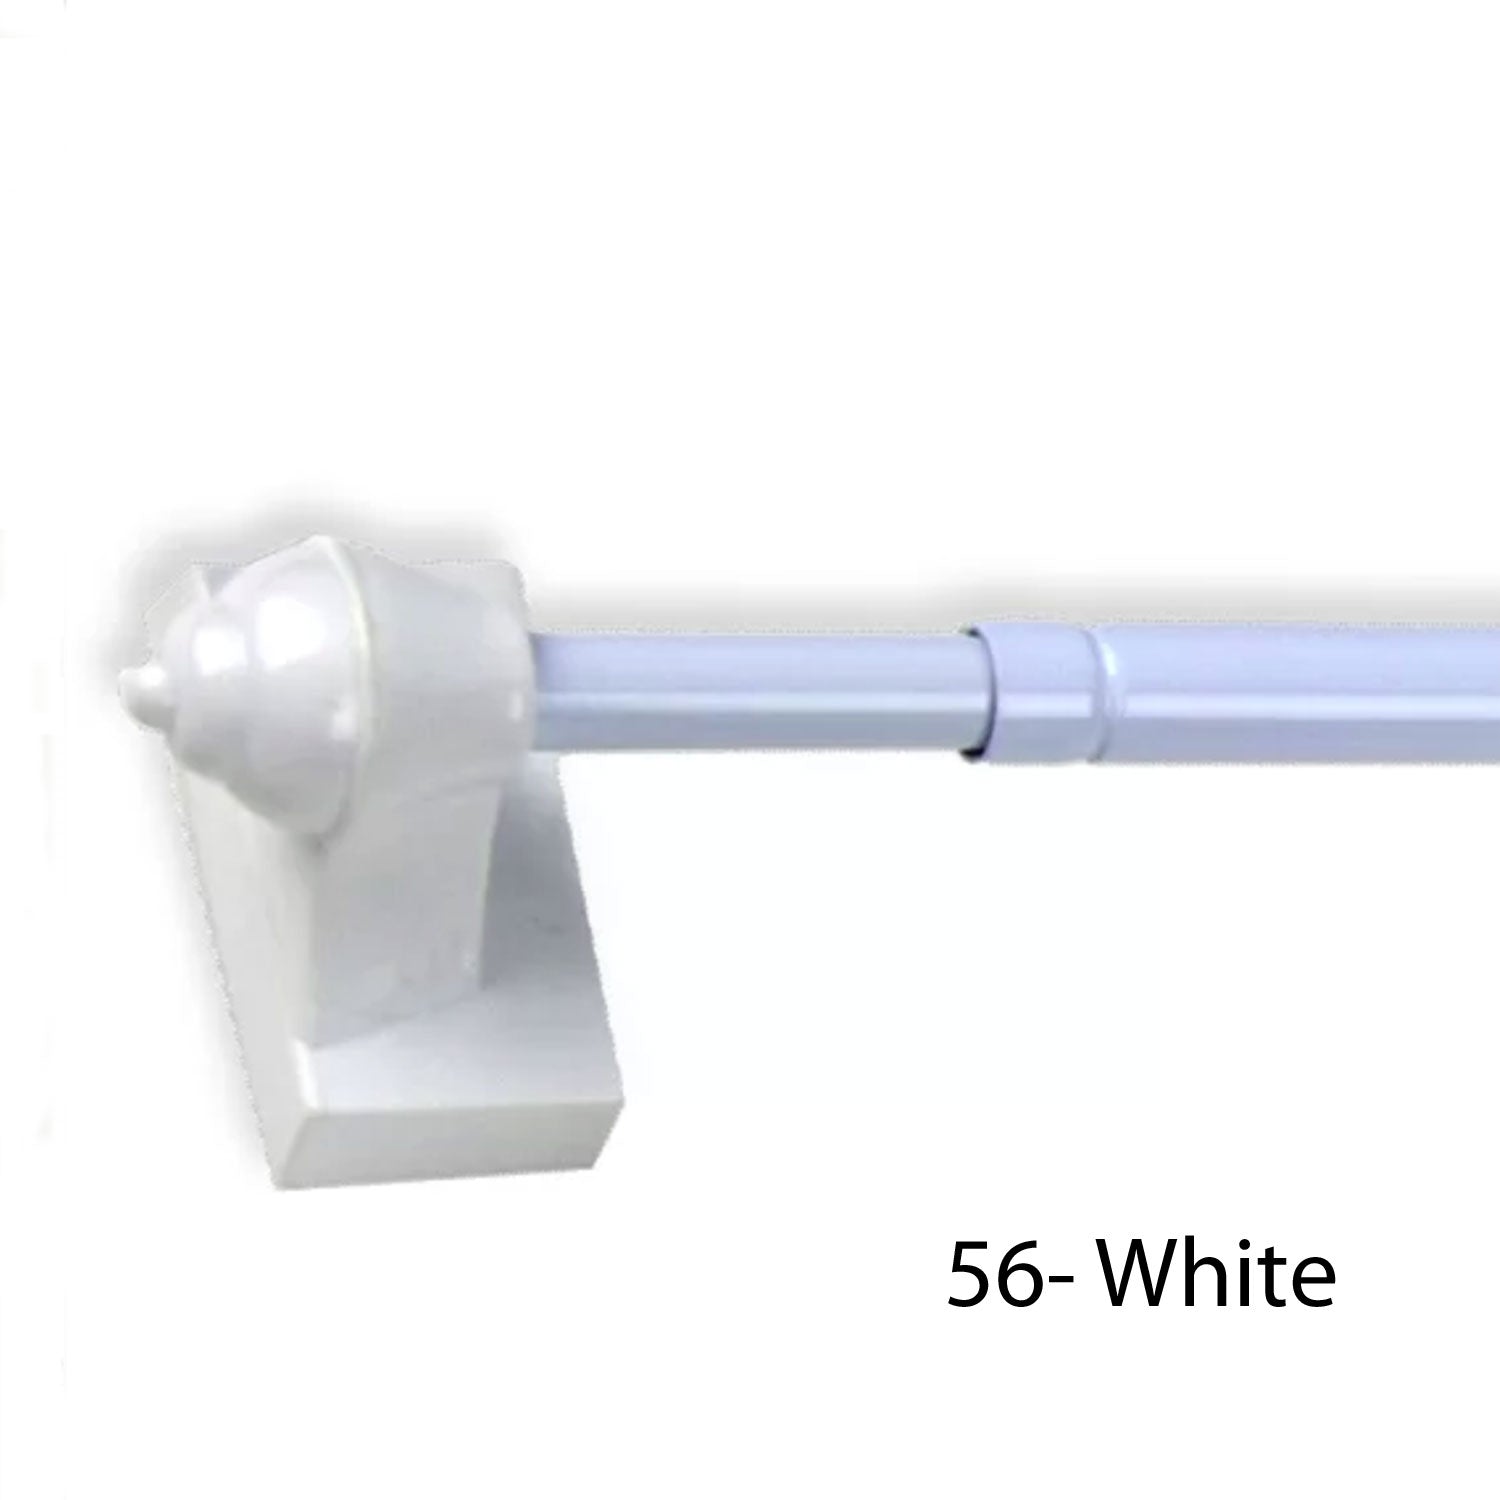 56-White Adjustable MagneRod Cafe Curtain Rod